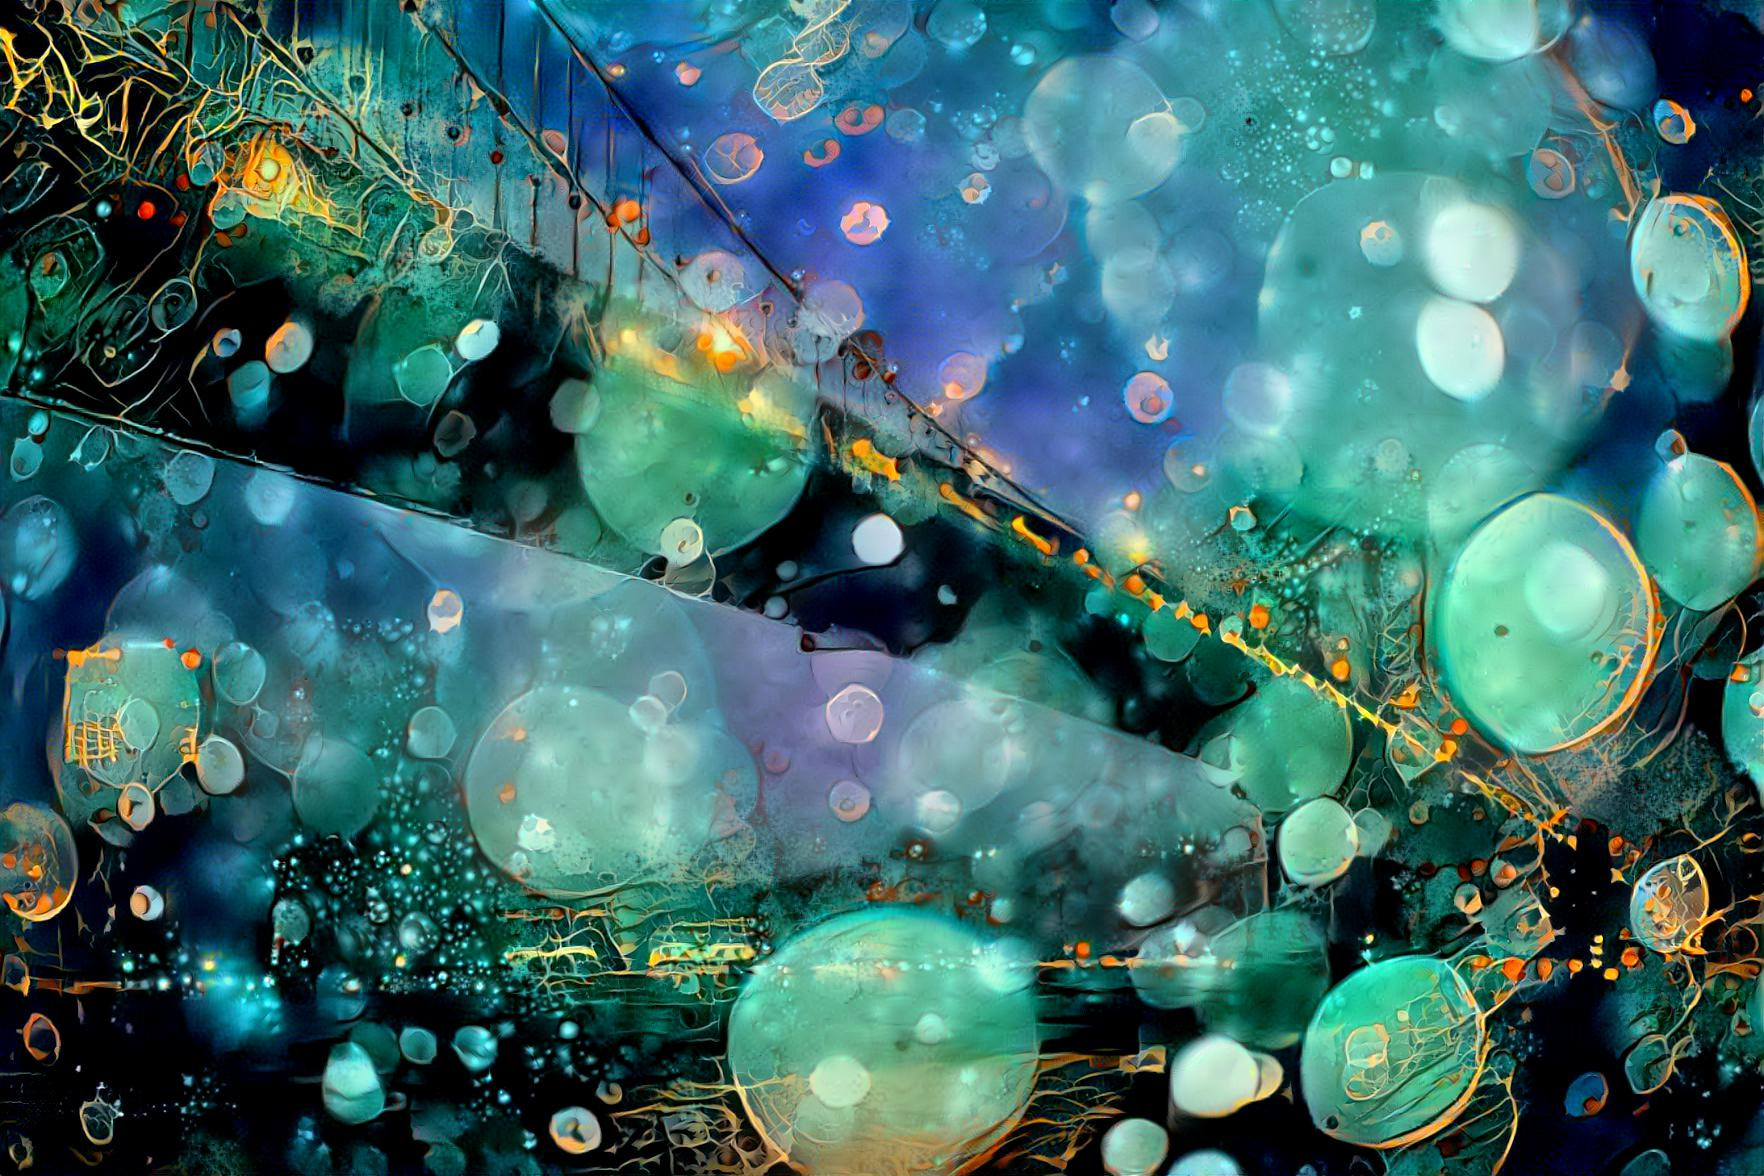 New York Bridge in the Rain - Deep Dream inspired by Ryan Christopher Jones photo